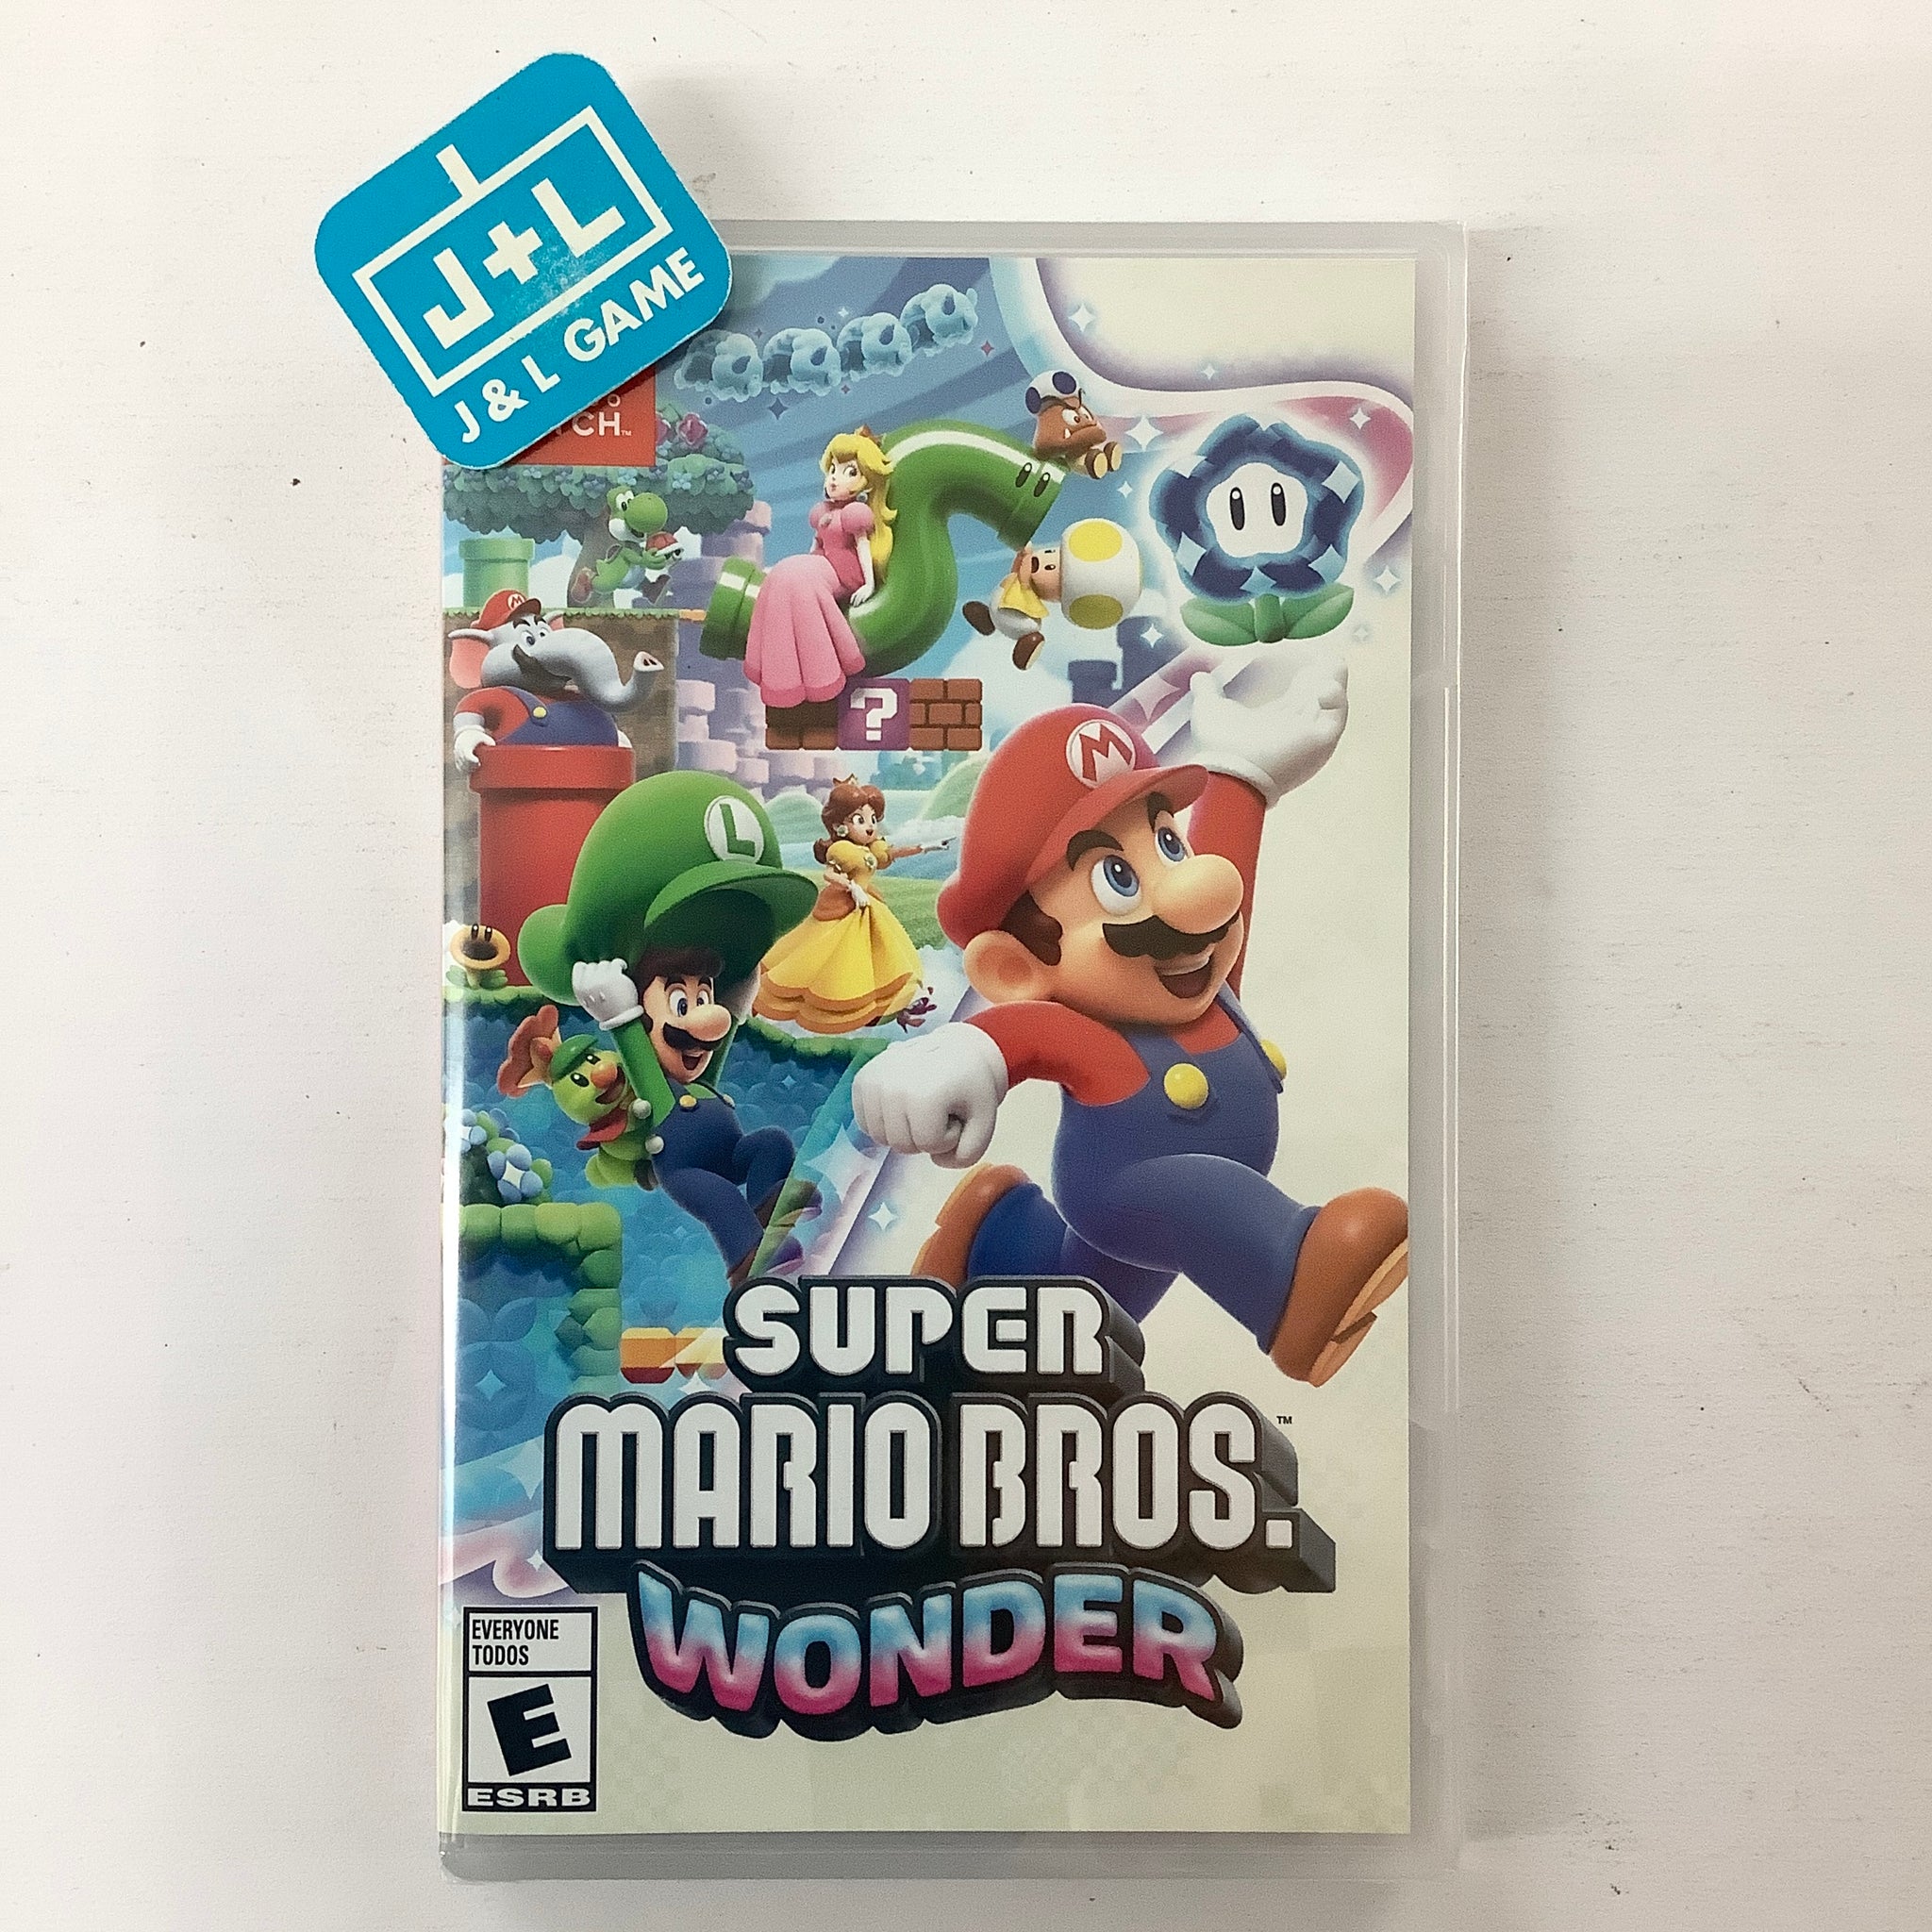 Where to buy Super Mario Bros Wonder